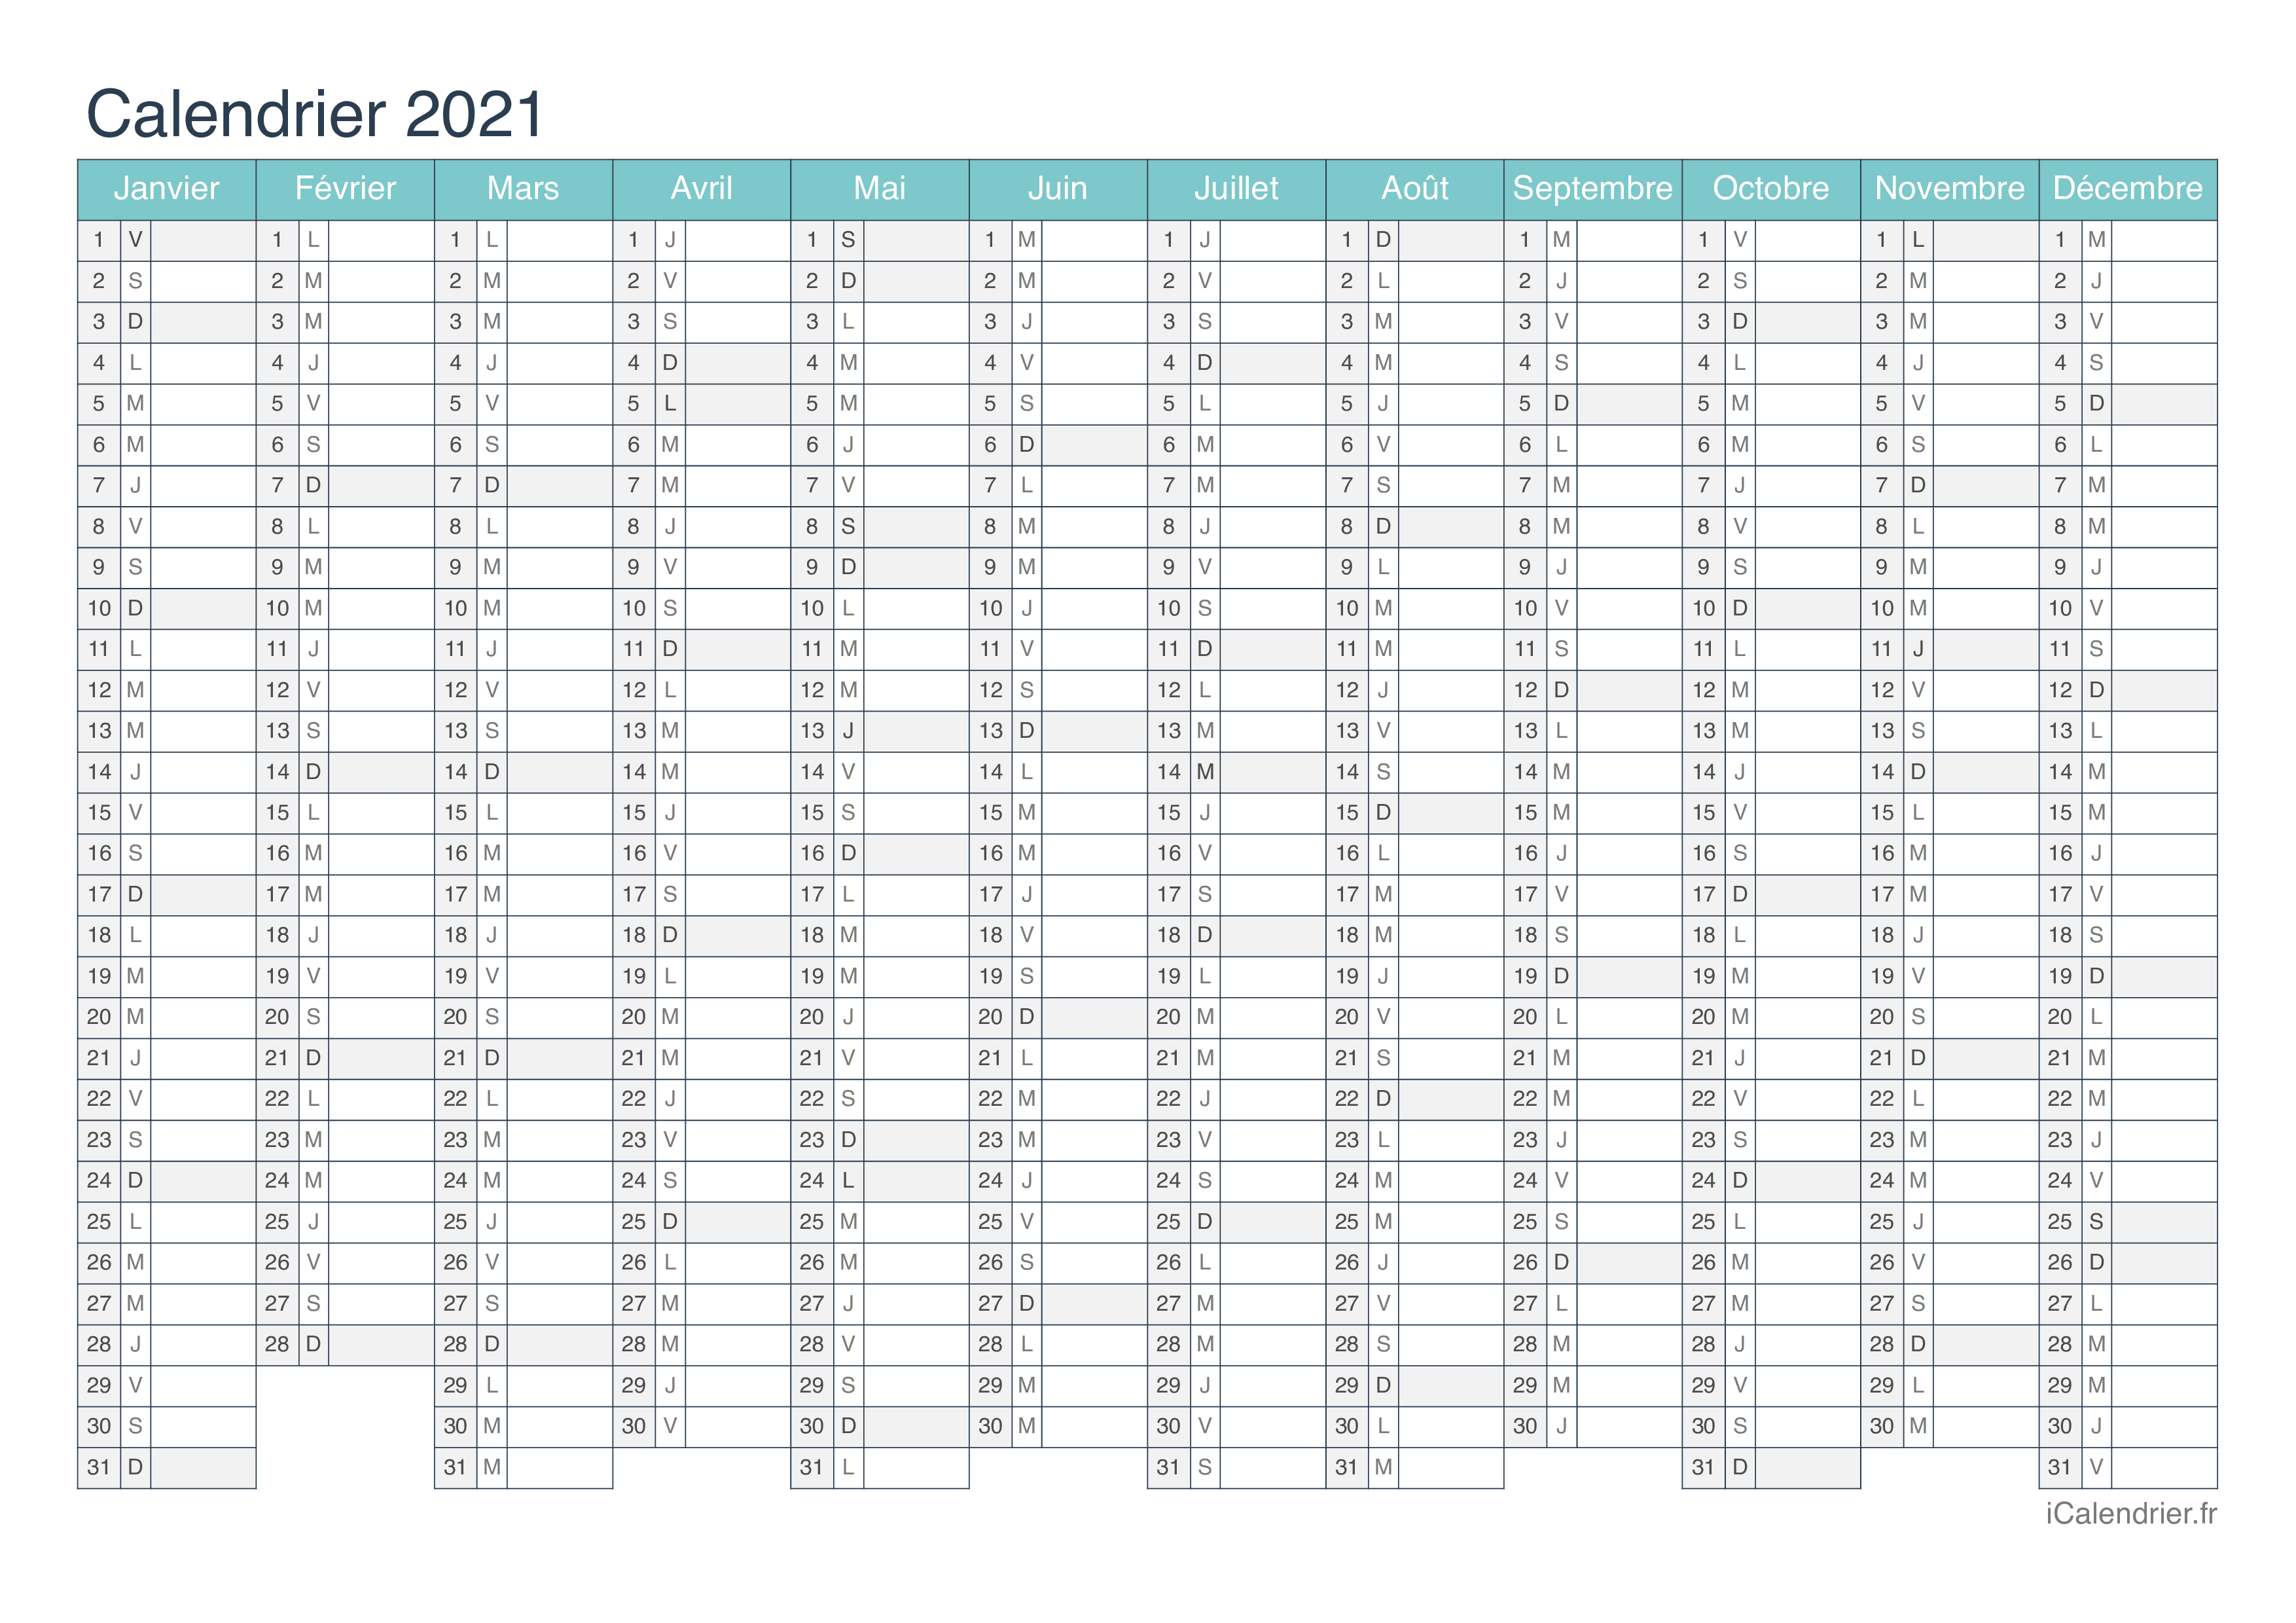 I Calendrier 2021 Calendrier 2021 à imprimer PDF et Excel   iCalendrier